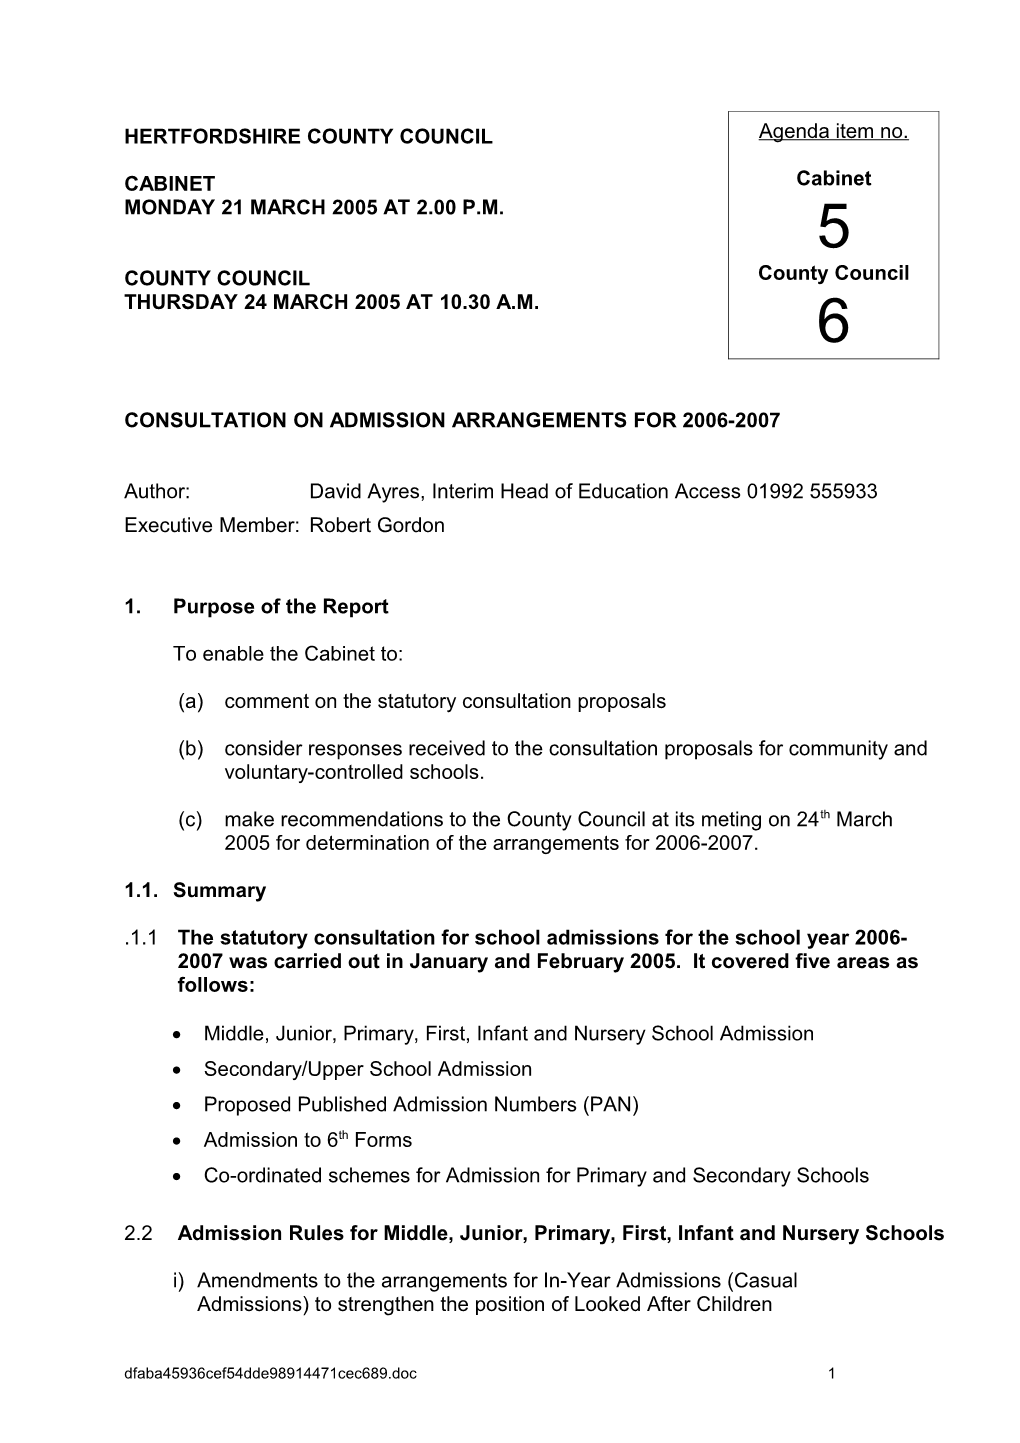 Consultation on Admission Arrangements for 2006-2007